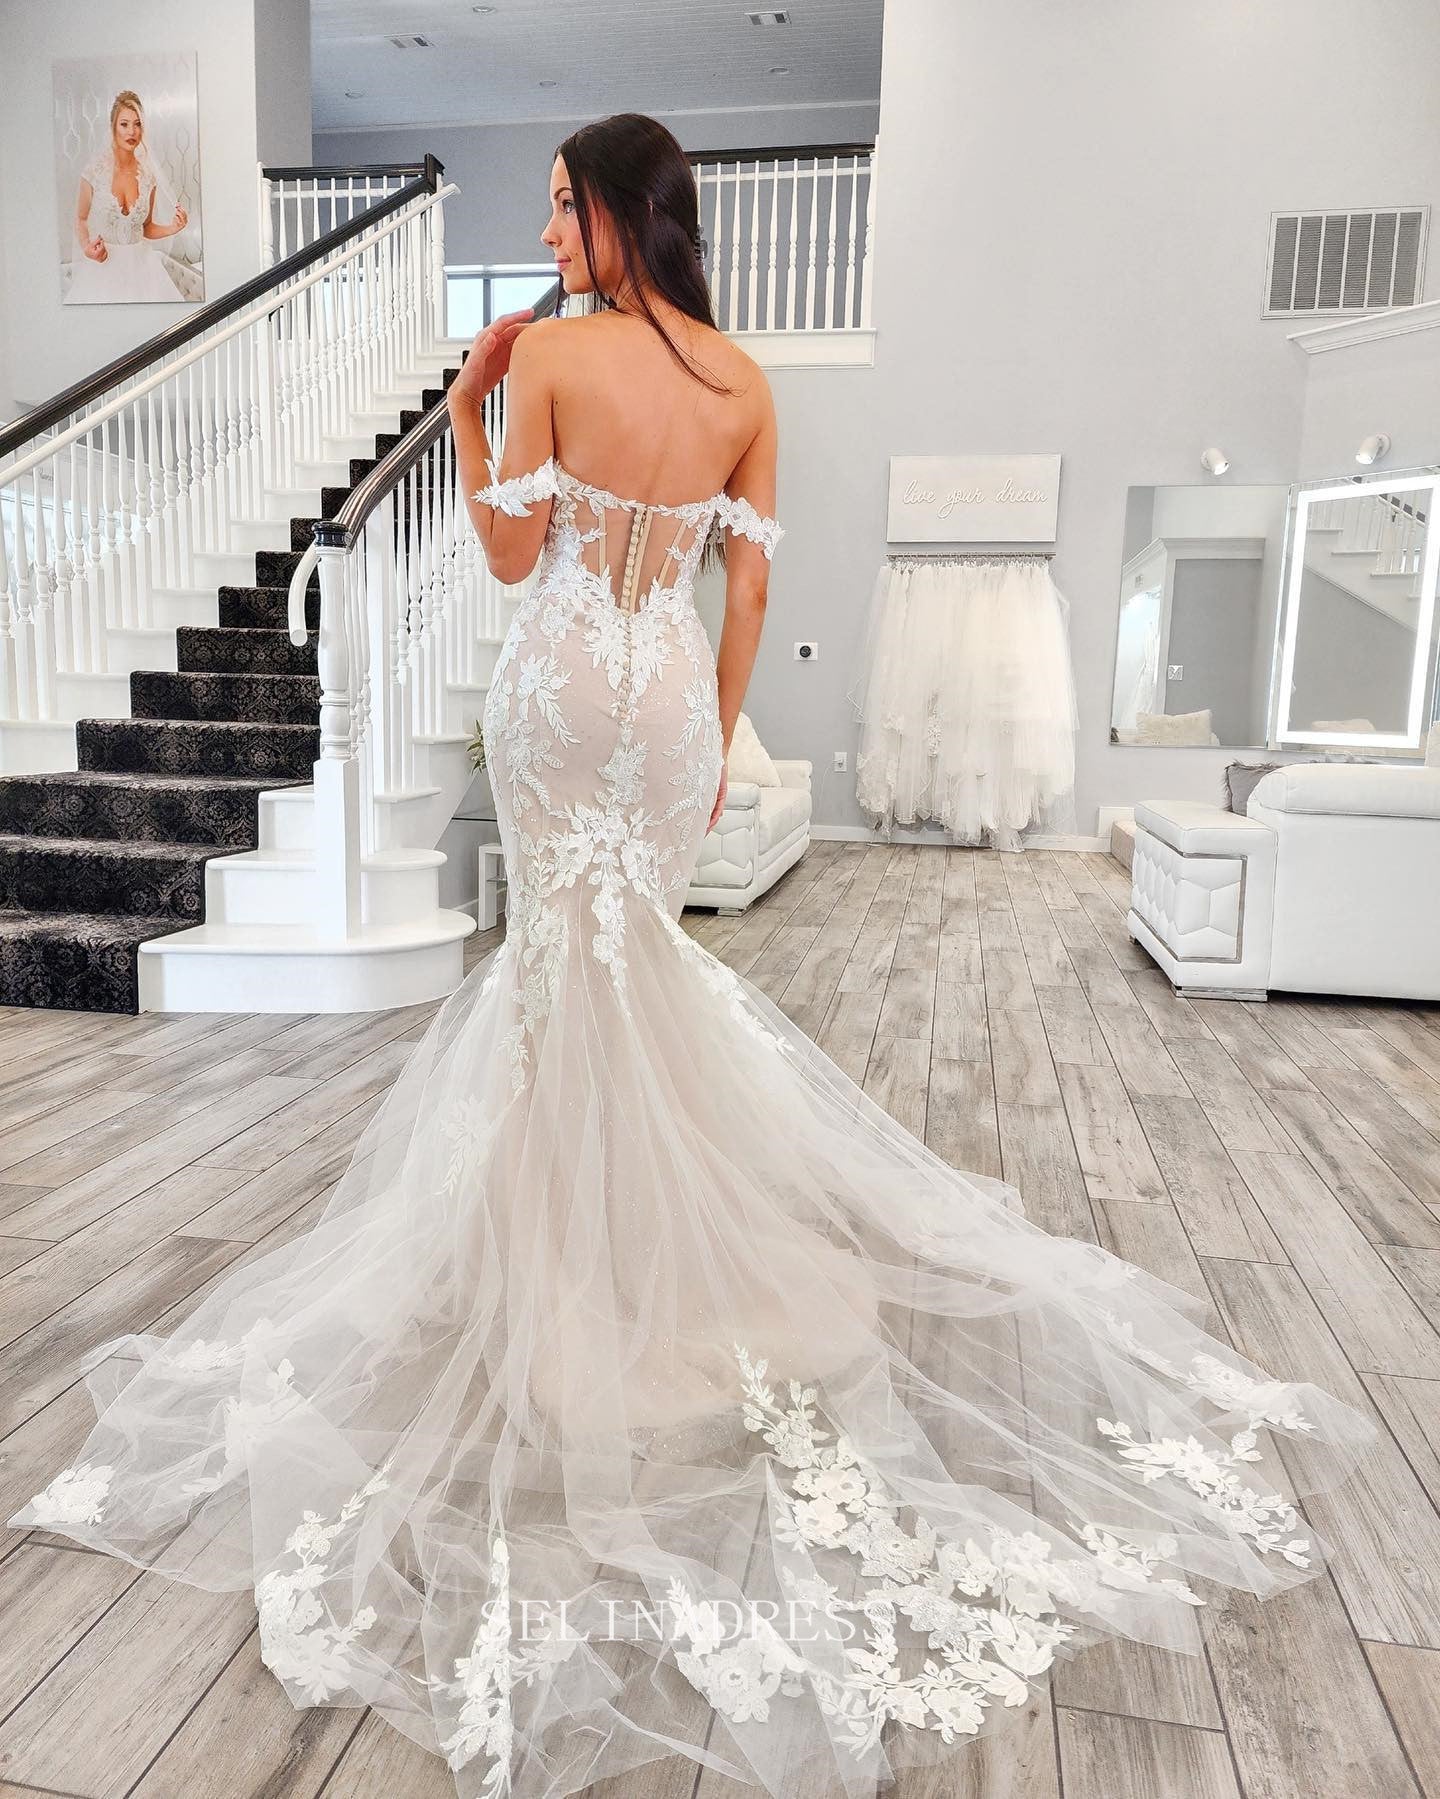 V neck Long Sleeve Lace Wedding Dresses Rustic Chiffon Wedding Dress SEW046  – SELINADRESS